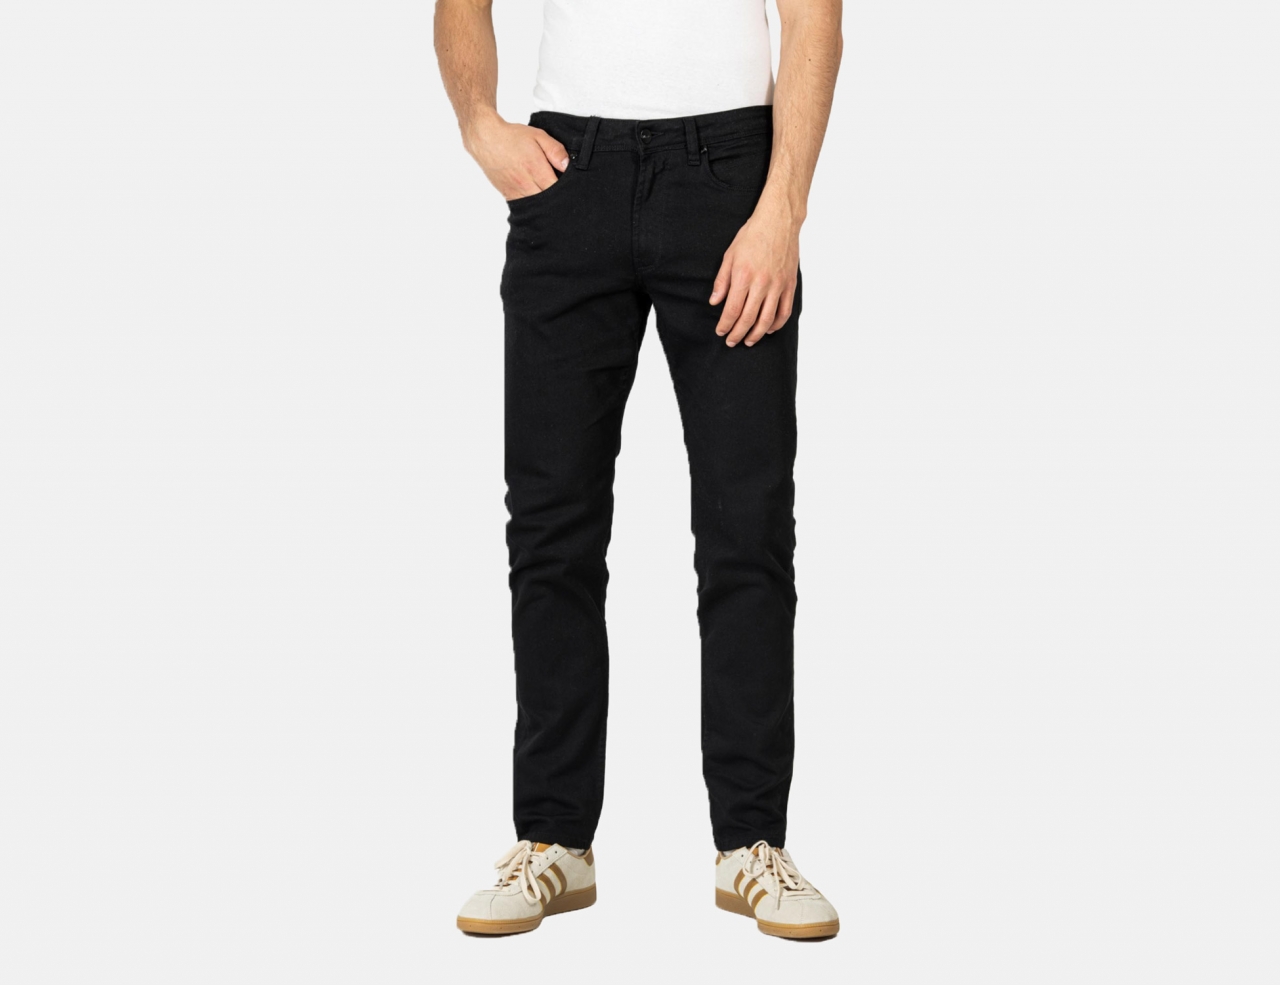 Reell Jeans Nova 2 Pant - Black